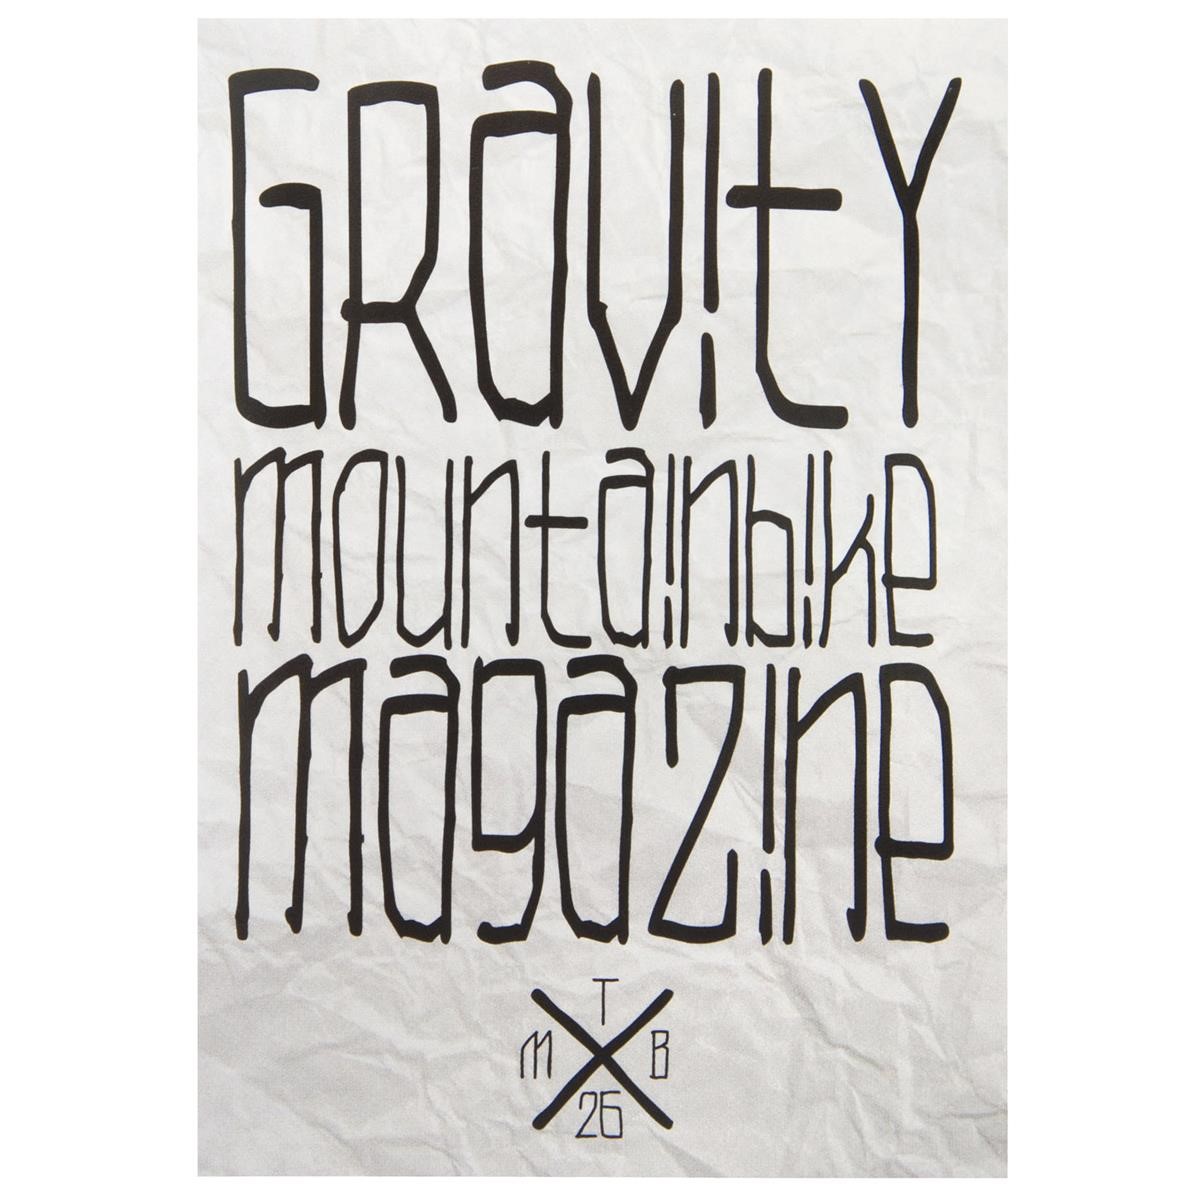 Gravity Mountainbike Magazine Autocollants  MTB 26, 10.4 cm